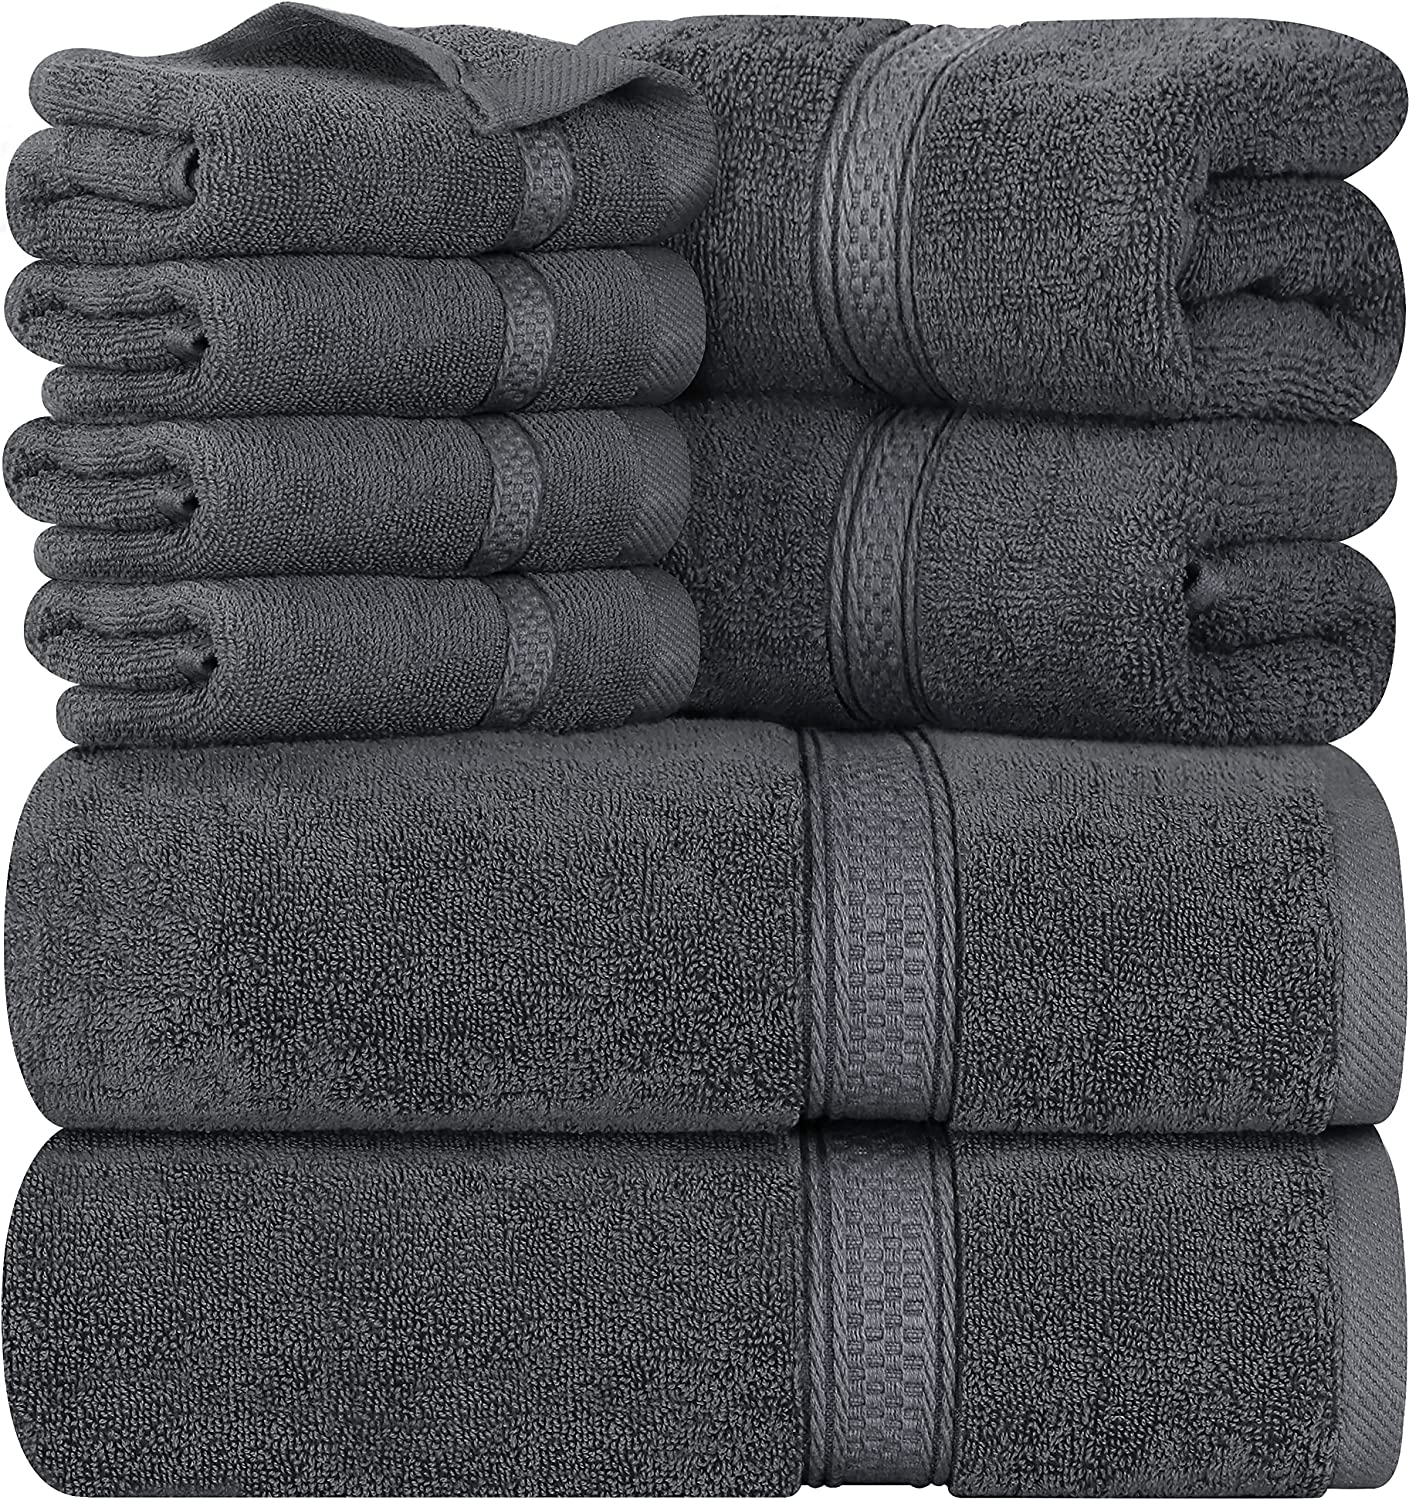  Utopia Towels 4 Bath Towels, 8 Washcloths and 4 Hand Towels :  Home & Kitchen